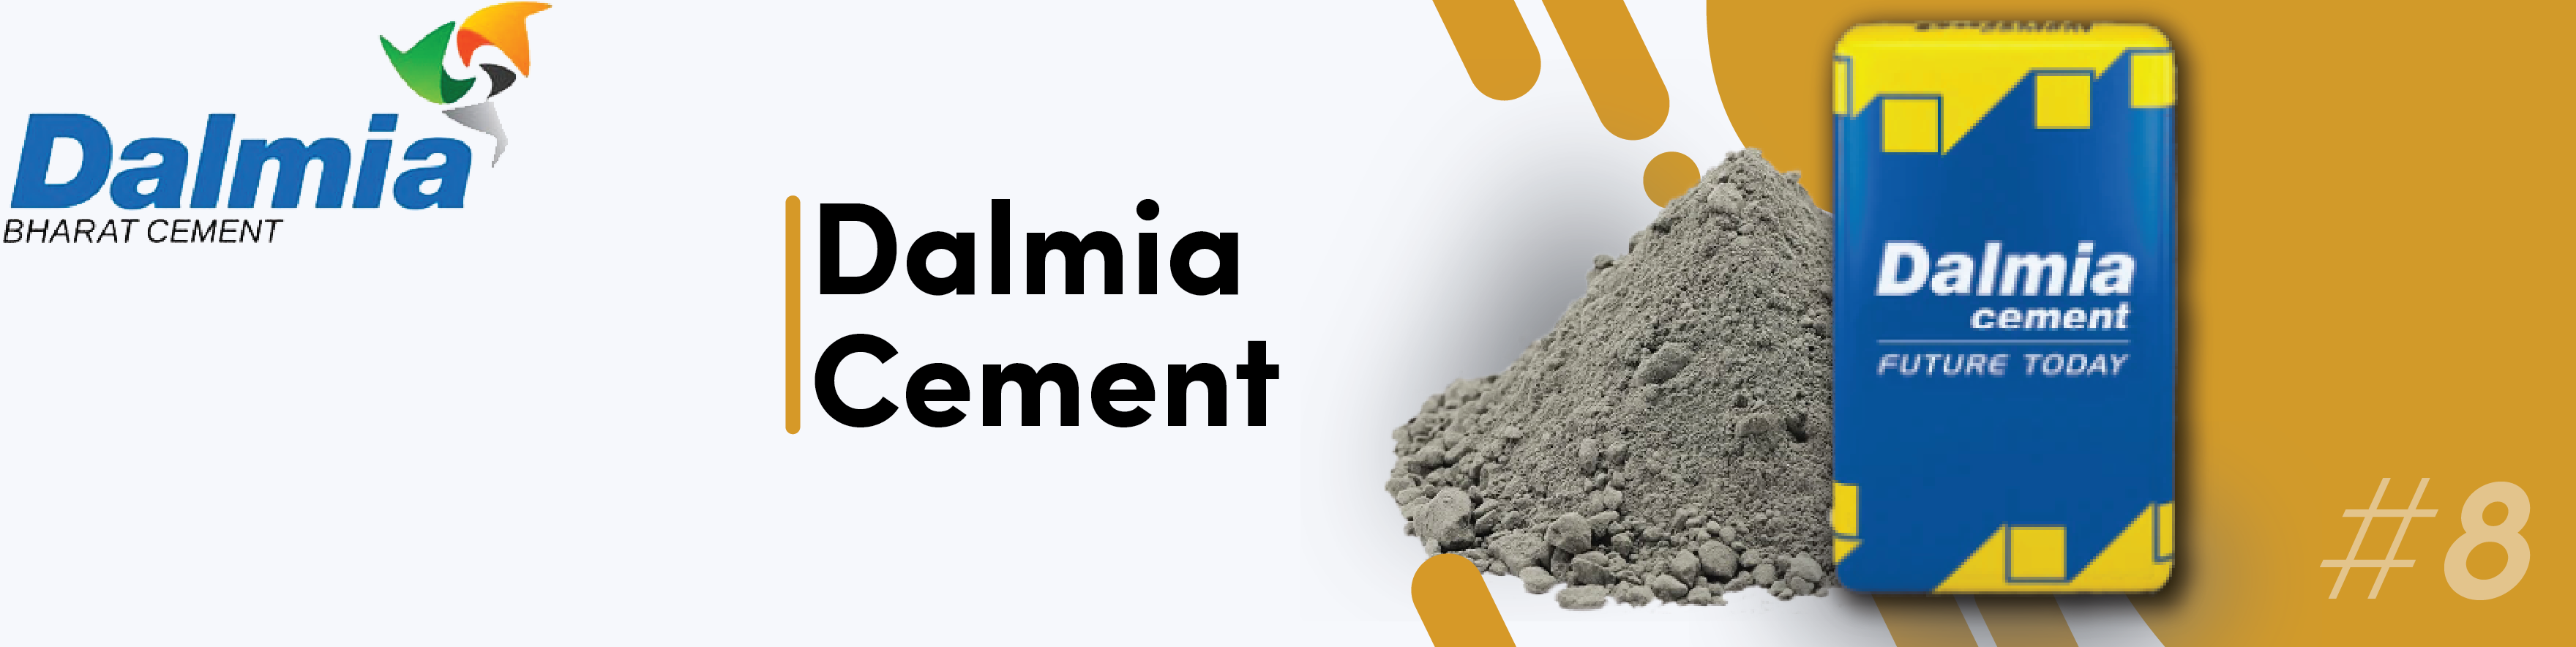 Dalmia Bharat Cements Ltd